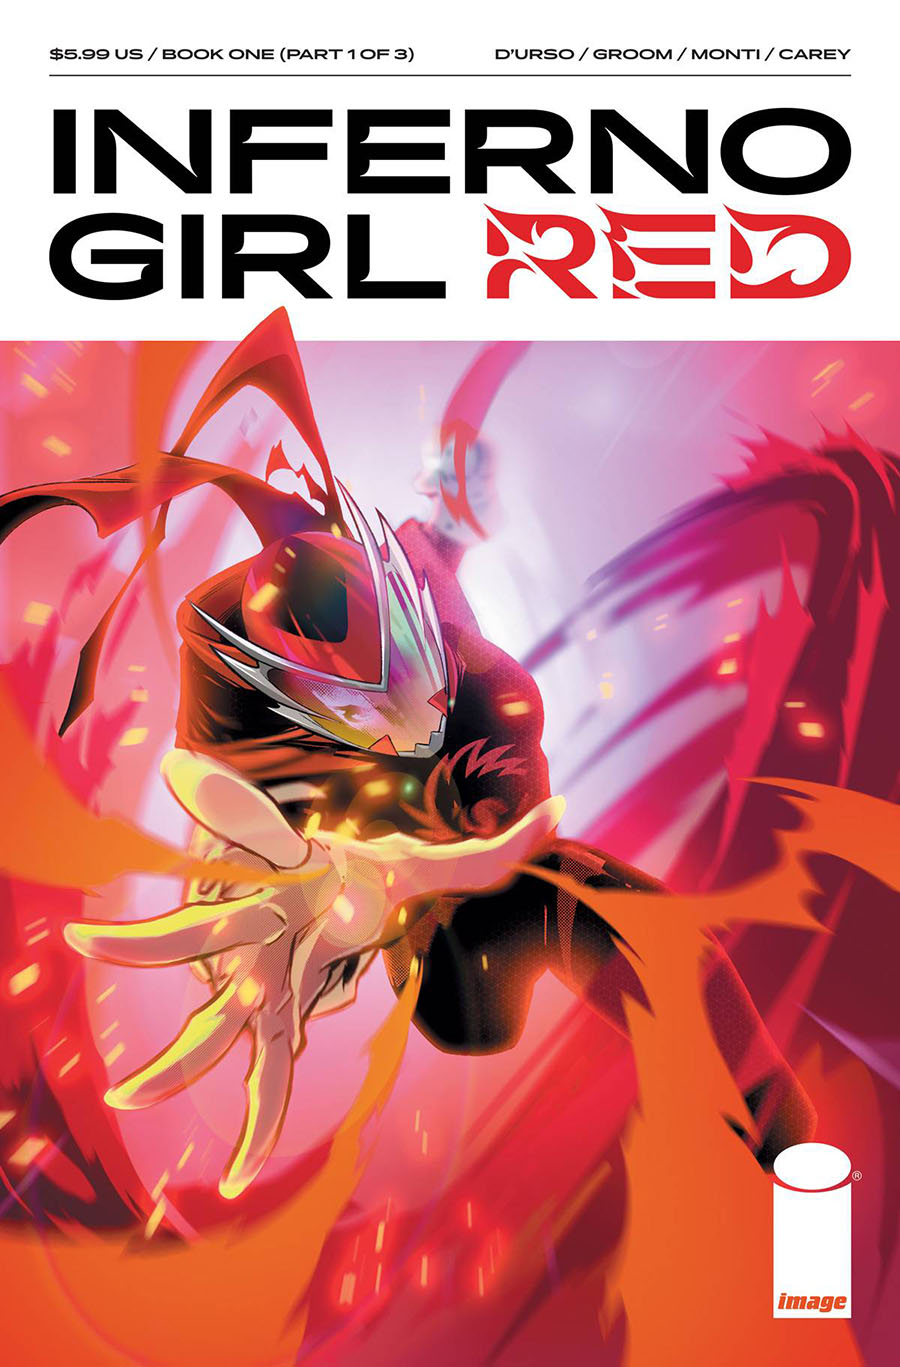 Inferno Girl Red Book 1 #1 Cover B Variant Francesco Manna Cover